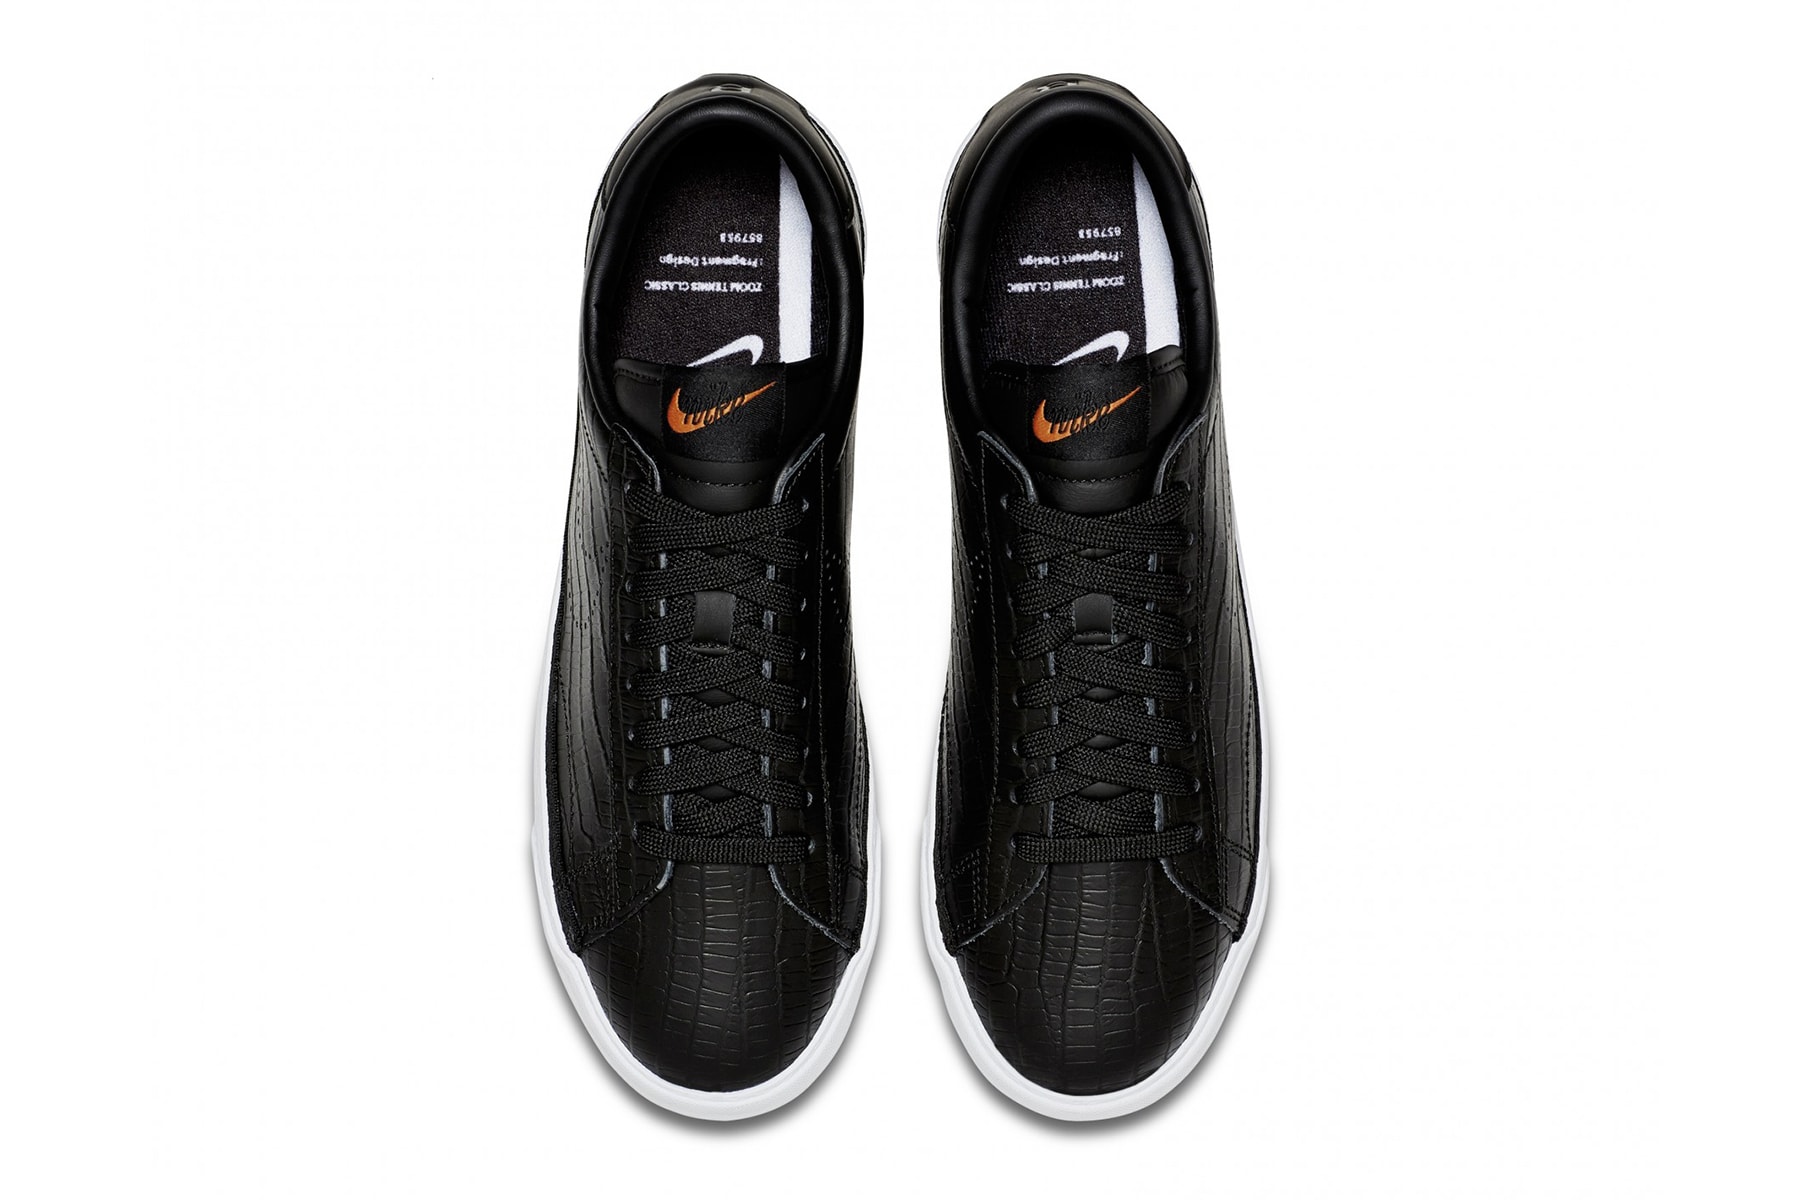 Fragment Design x NikeLab Air Zoom Classic AC black "crocodile" leather white sole dover street market